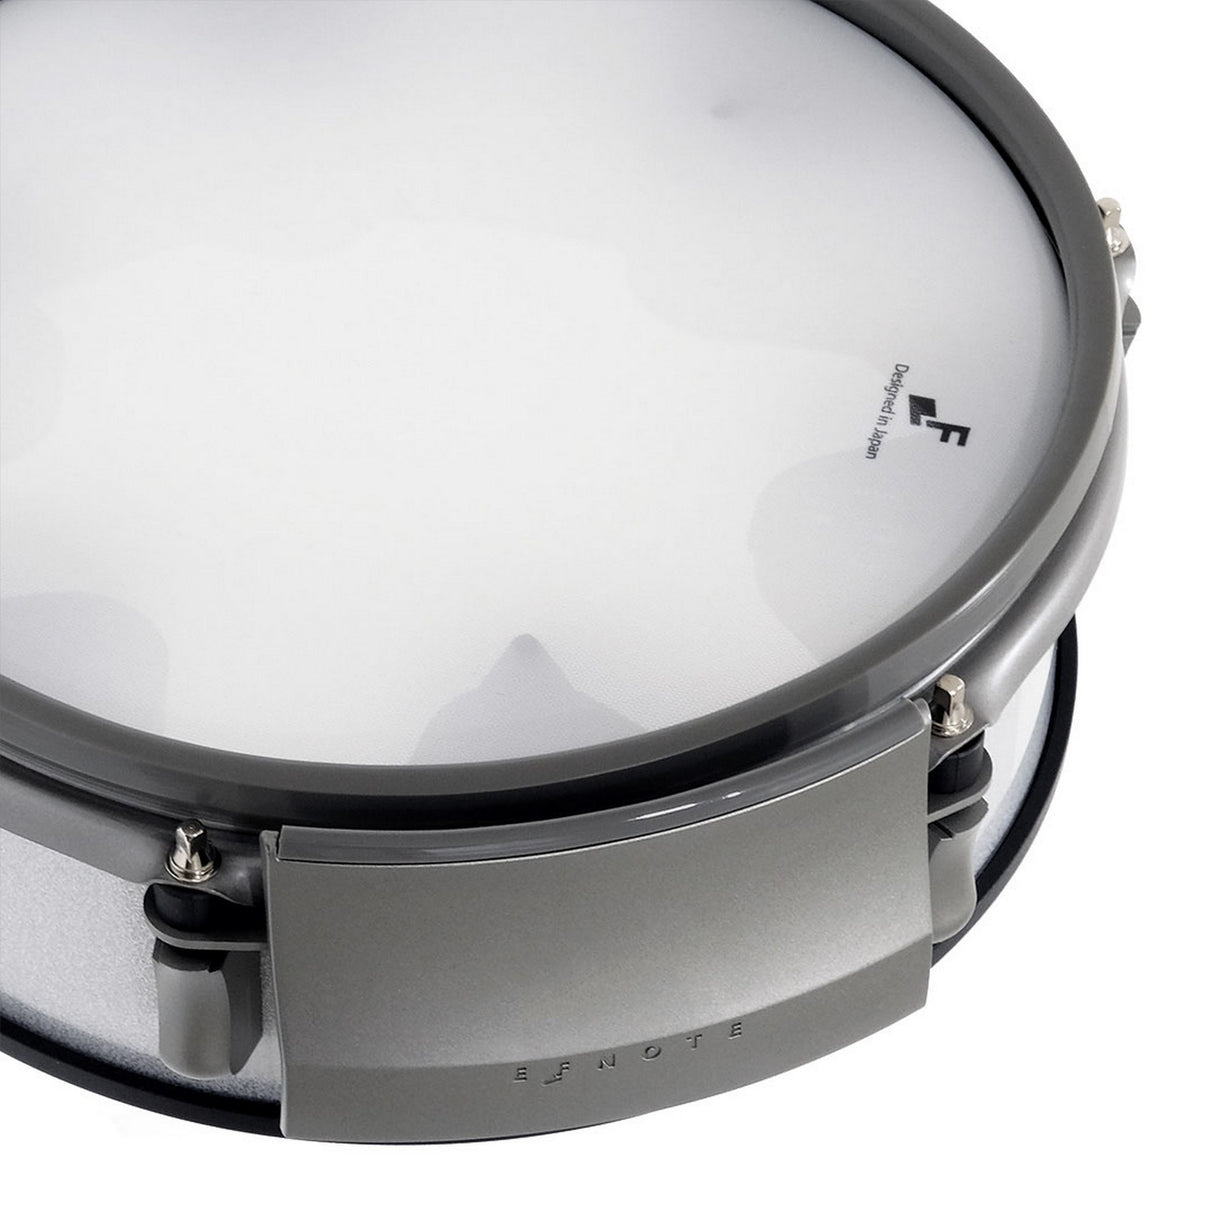 EFNOTE 3 Acoustic Designed Electronic Drum Set, White / Sparkle